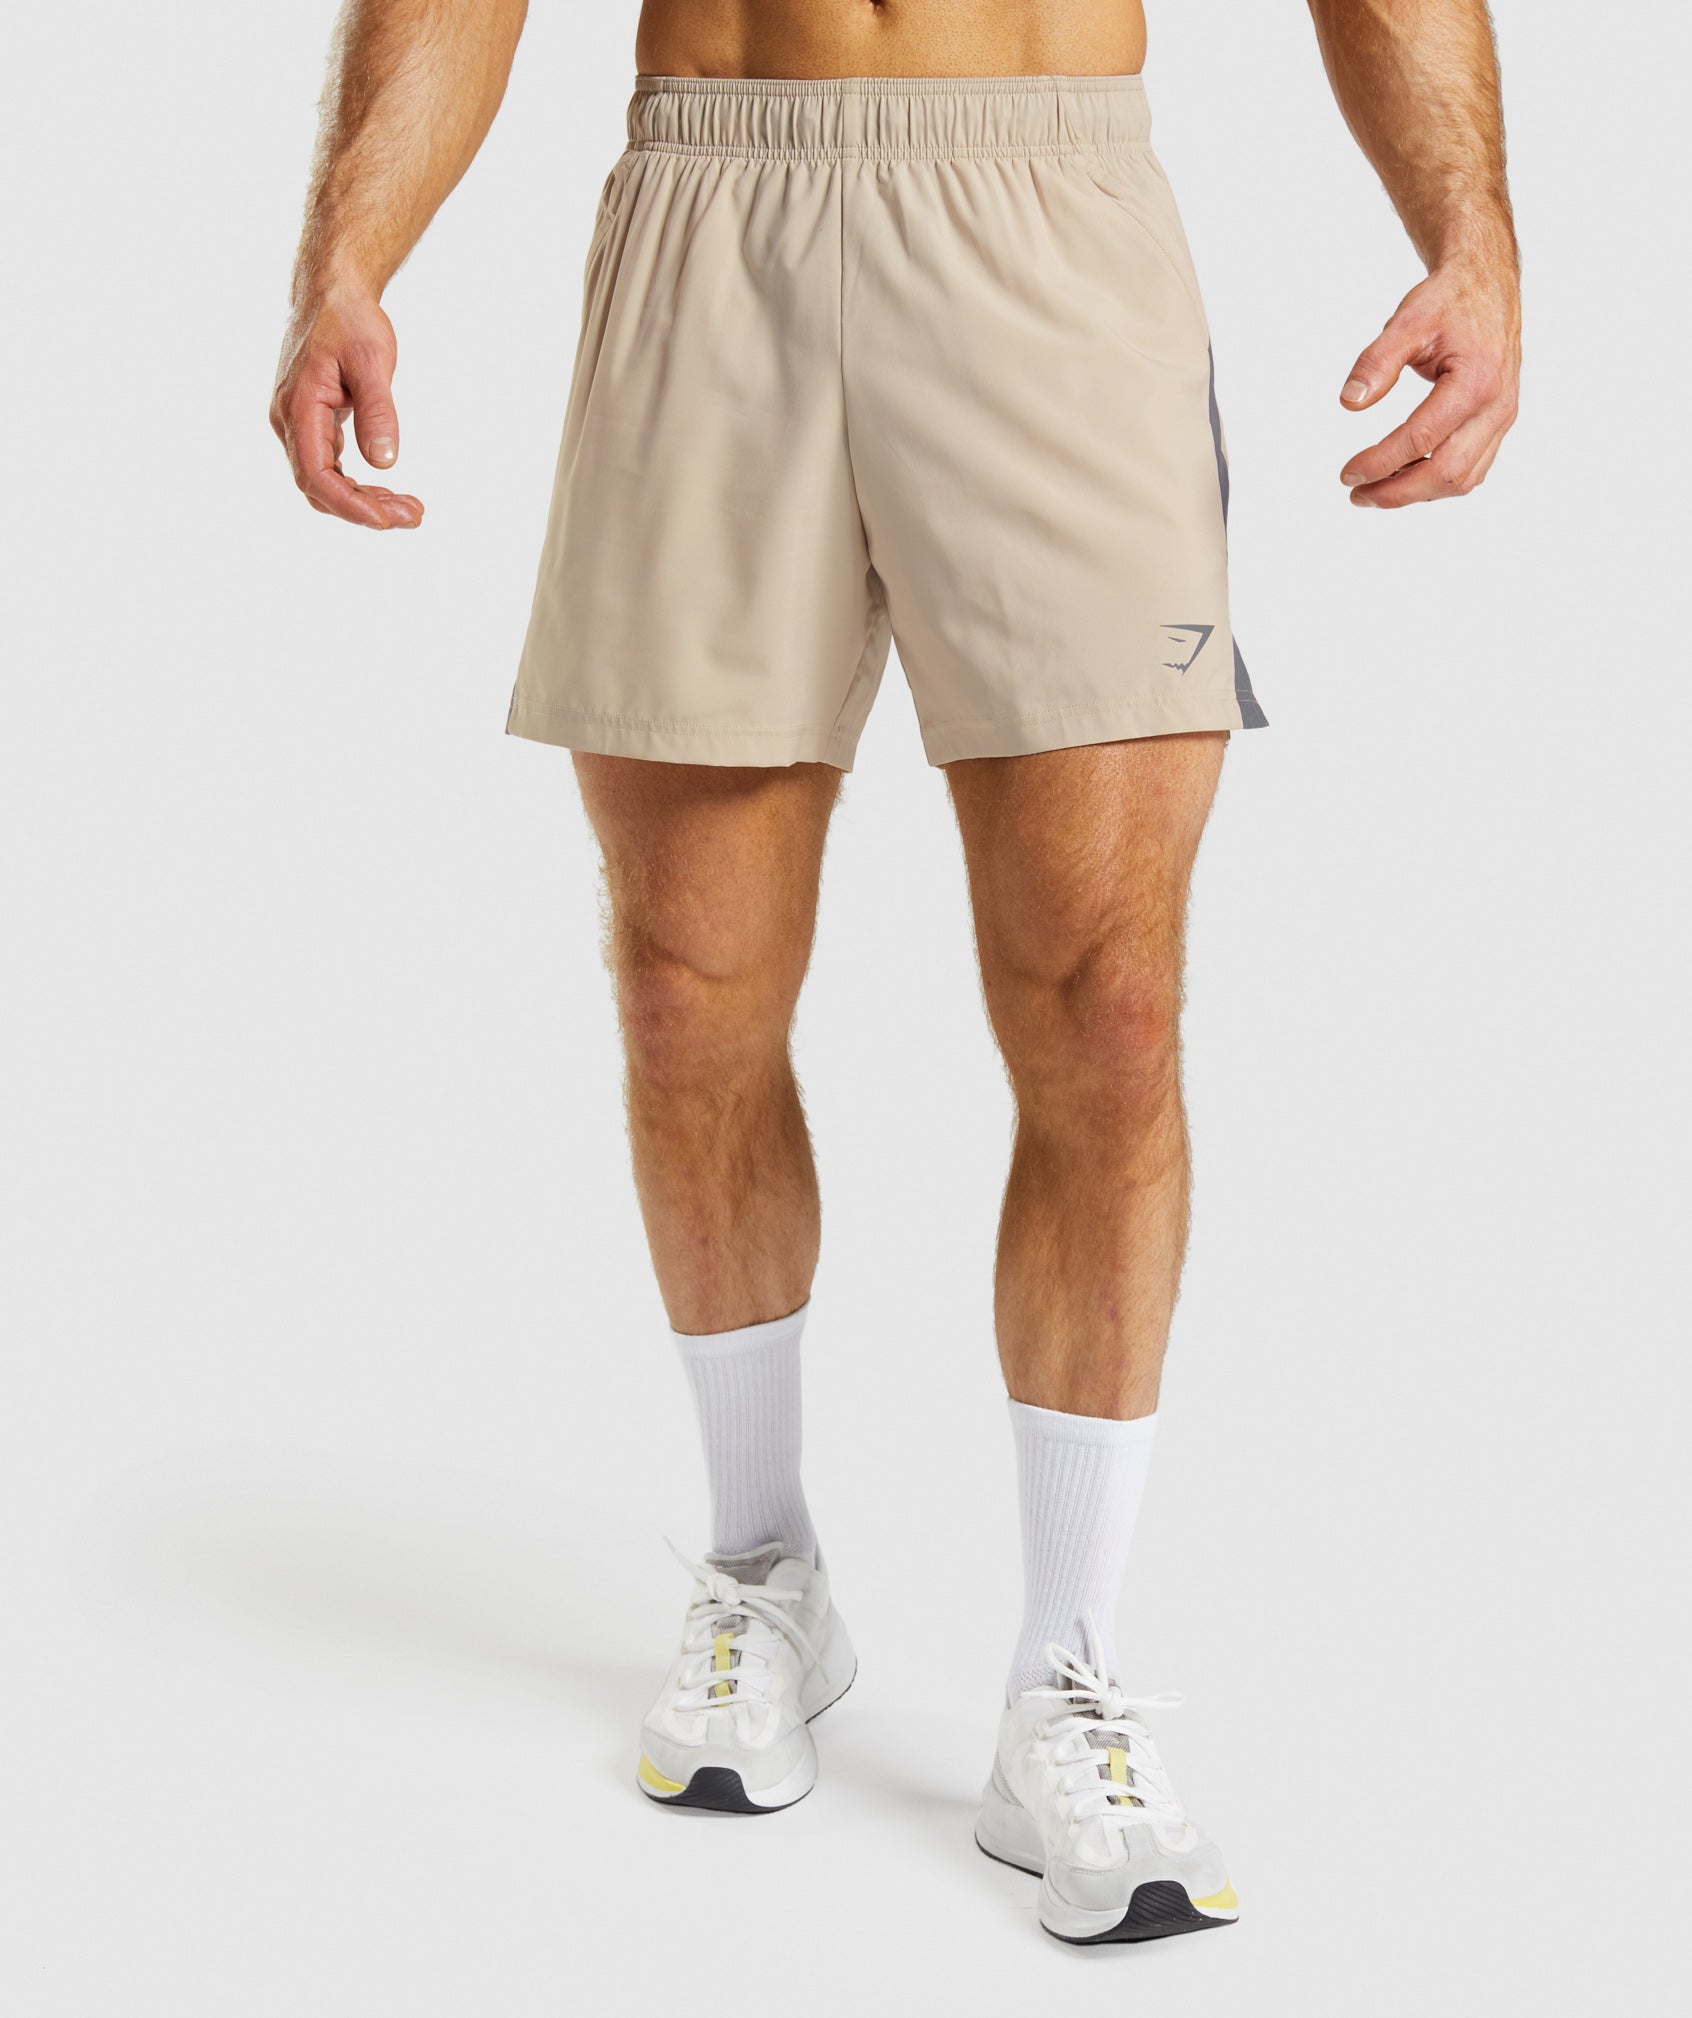 Sport 7" Shorts dans Toasted Brown/Silhouette Greyest en rupture de stock